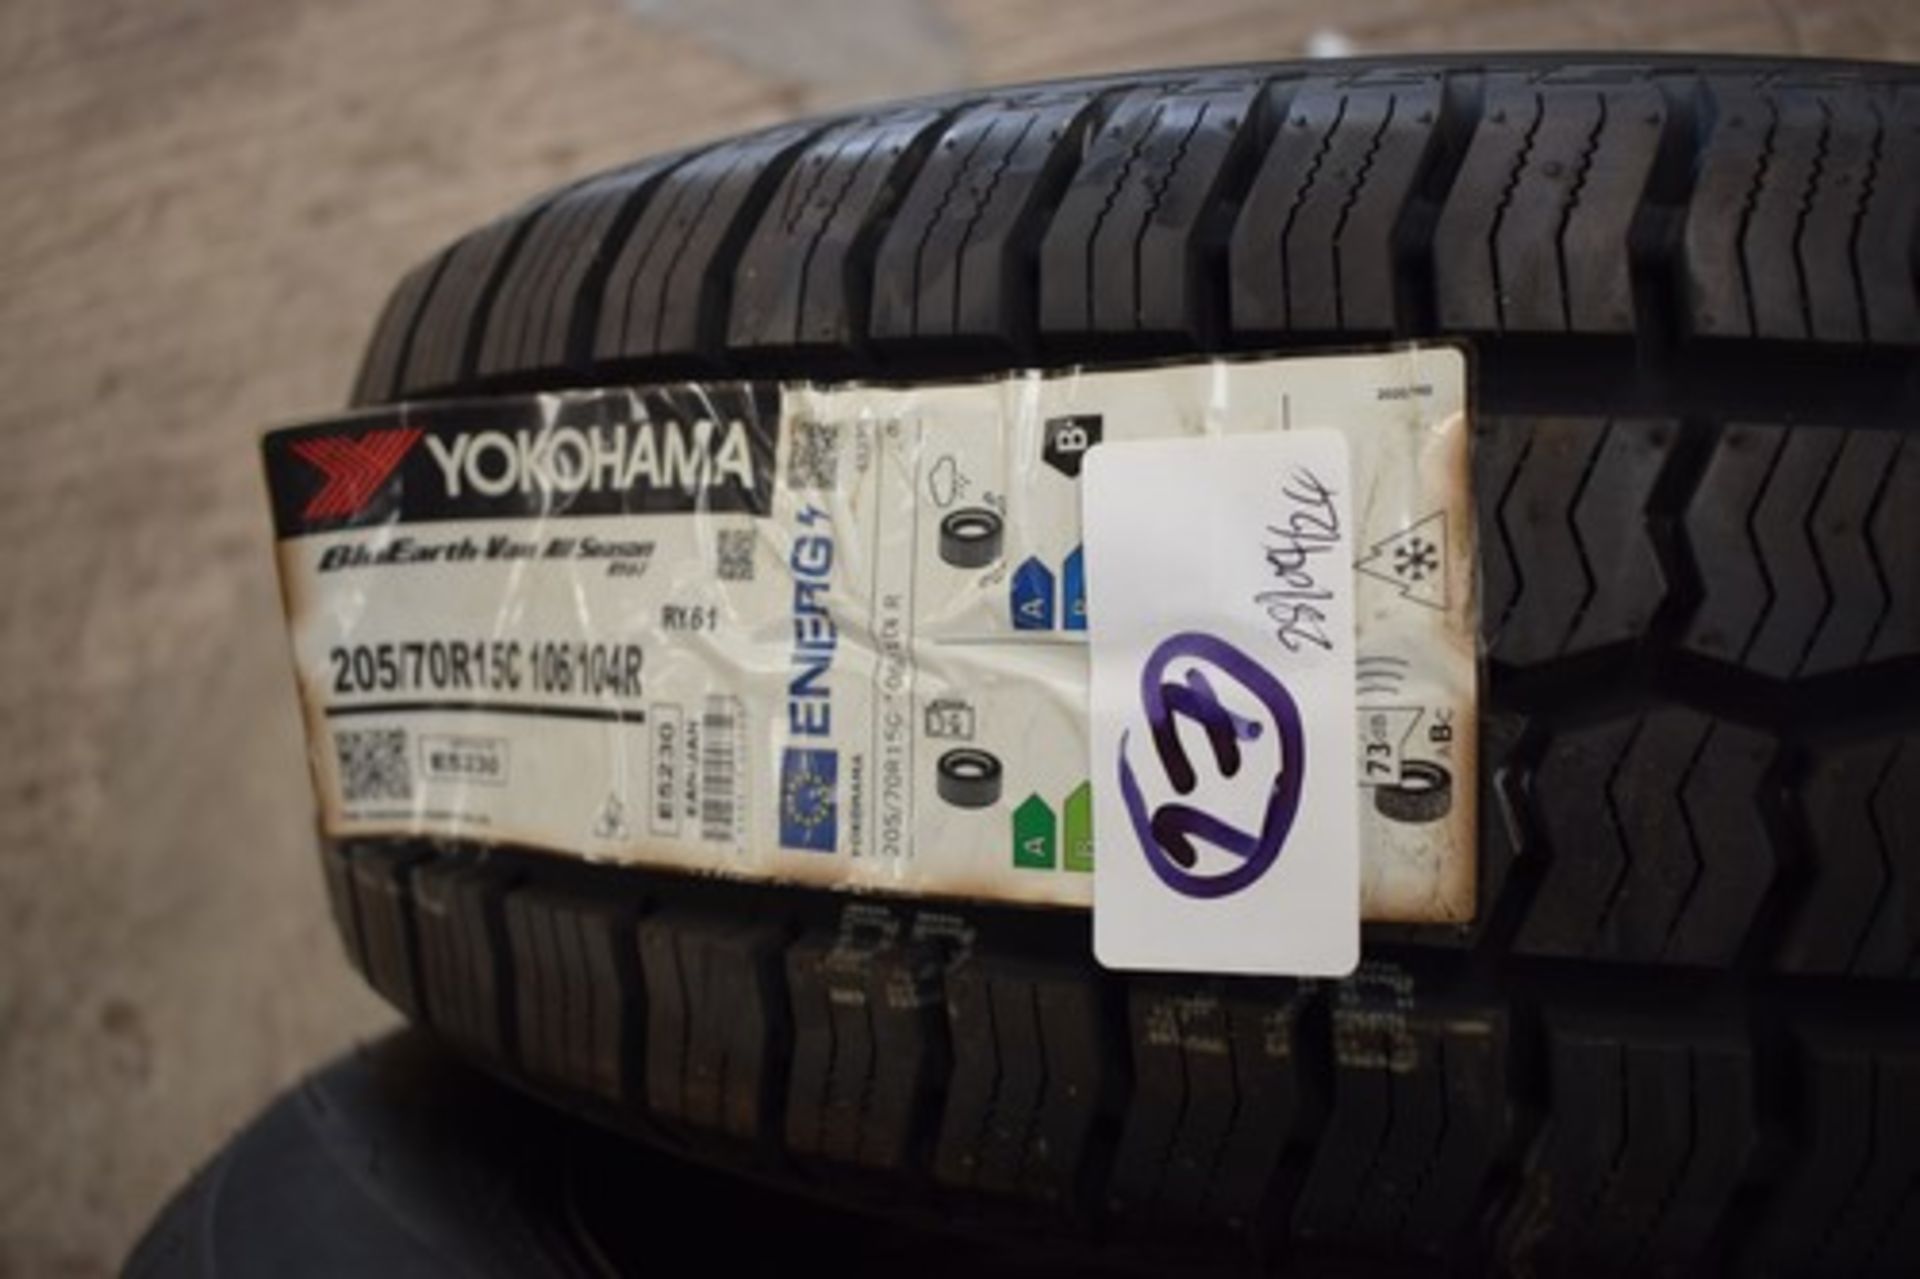 1 x Yokohama Bluearth Van all Season RY61 tyre, size 205/70R15C 106/104R - new with label (cage 3)(